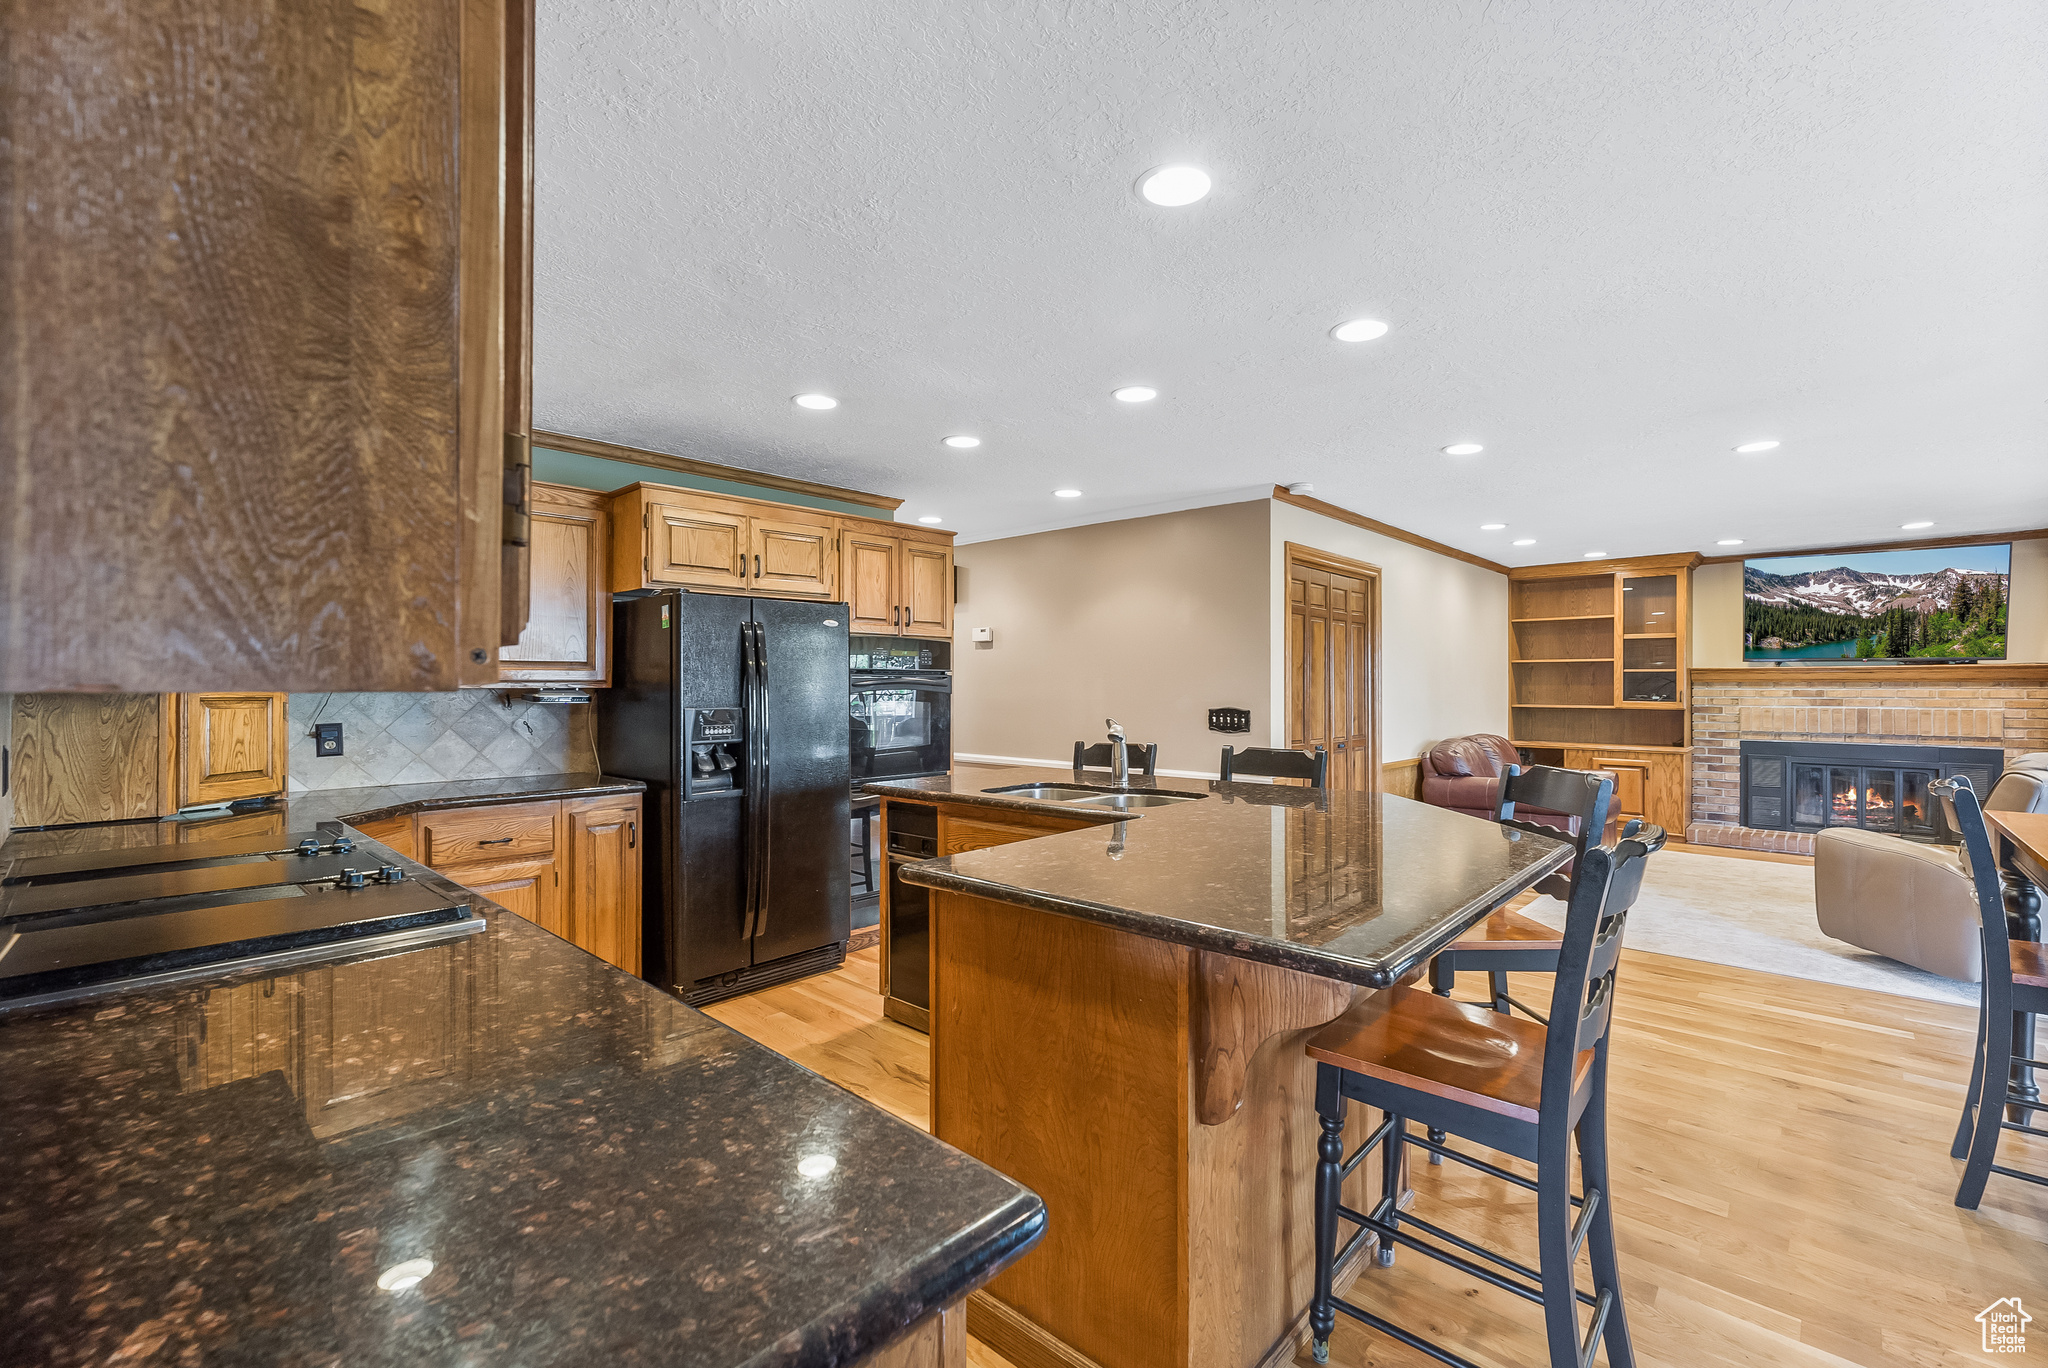 Kitchen with granite countertops and hardwood flooring